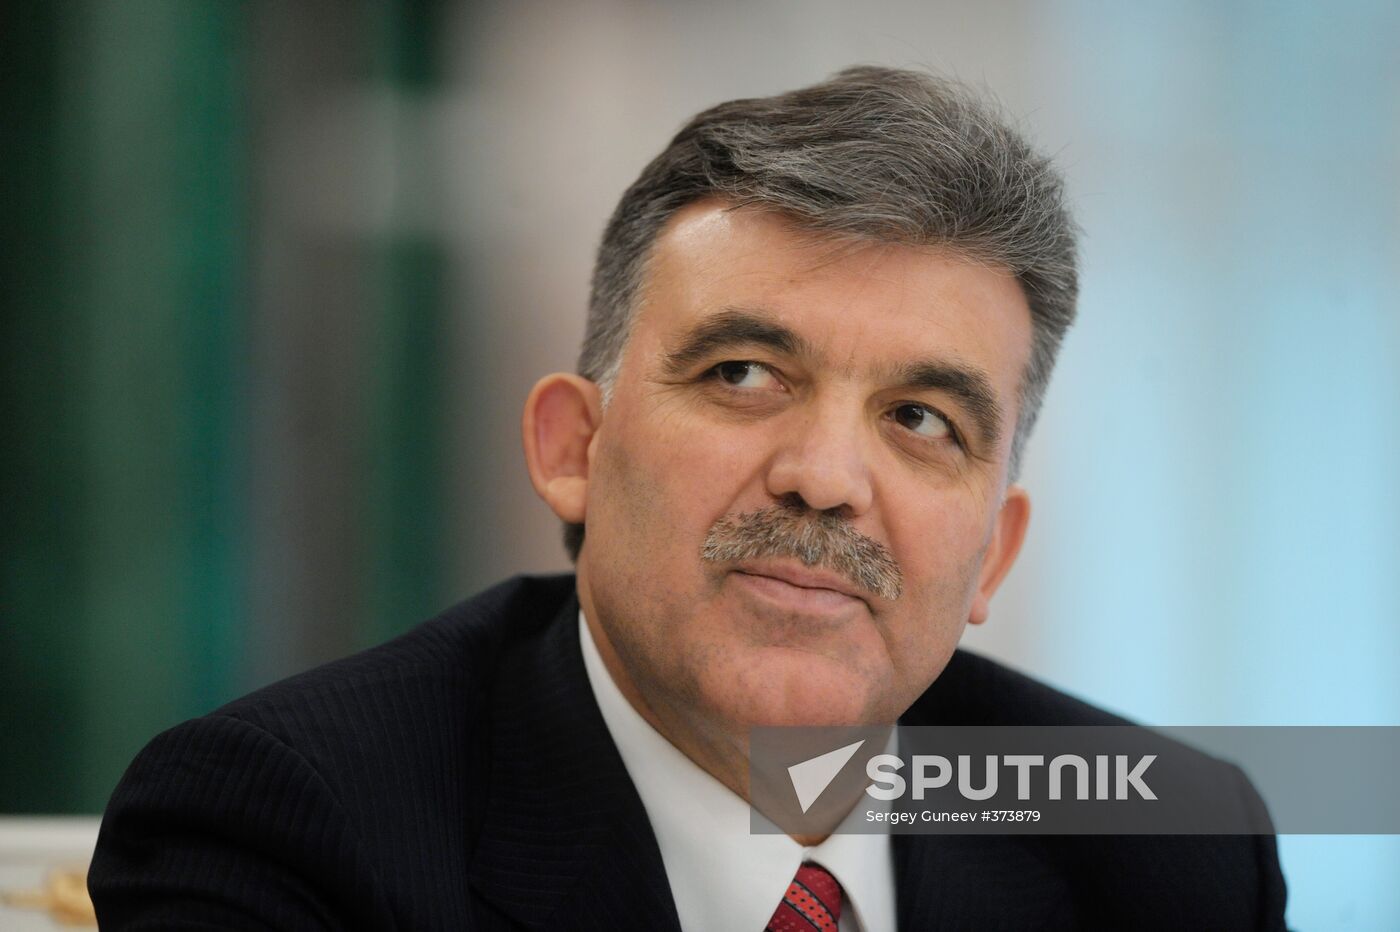 Turkish President Abdullah Gul's state visit to Russia